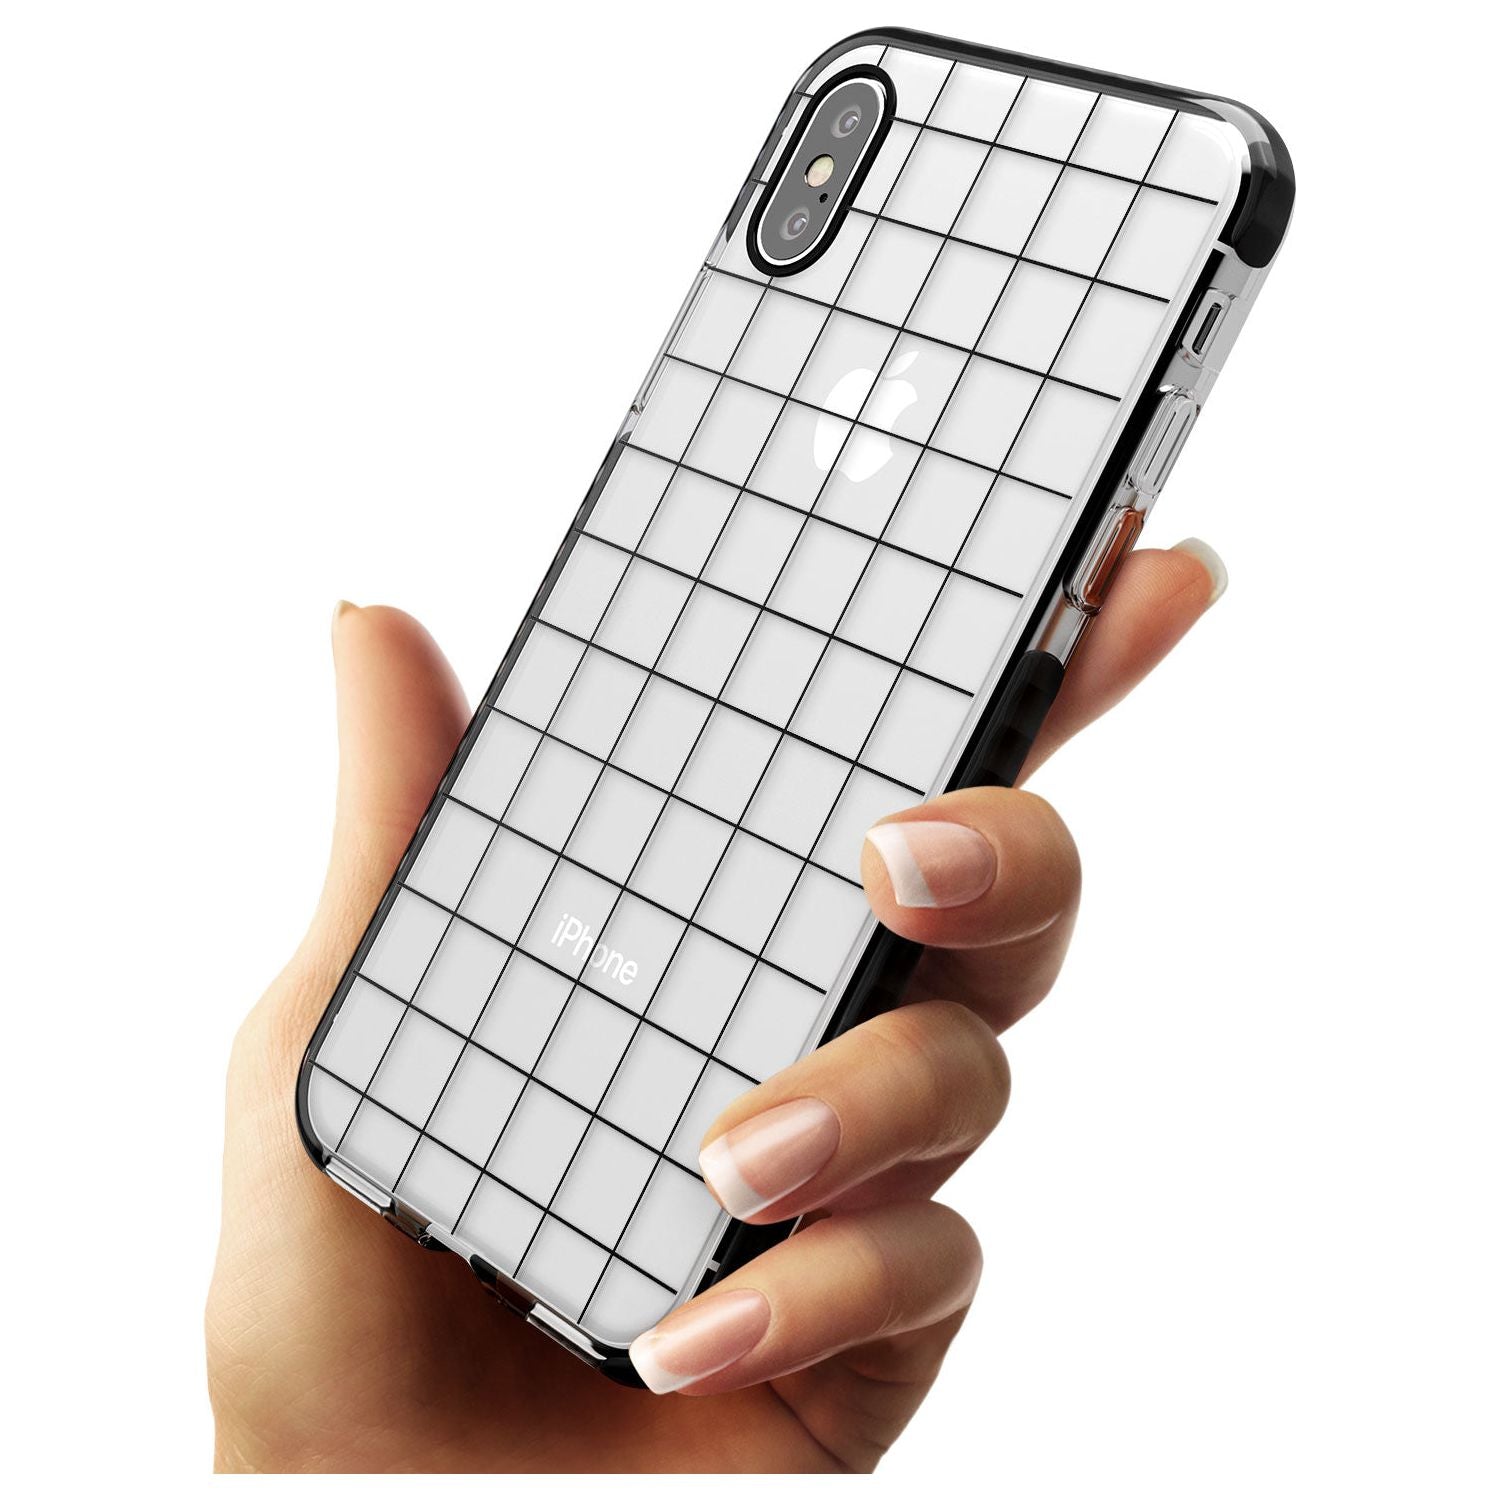 Simplistic Large Grid Pattern Black (Transparent) Black Impact Phone Case for iPhone X XS Max XR